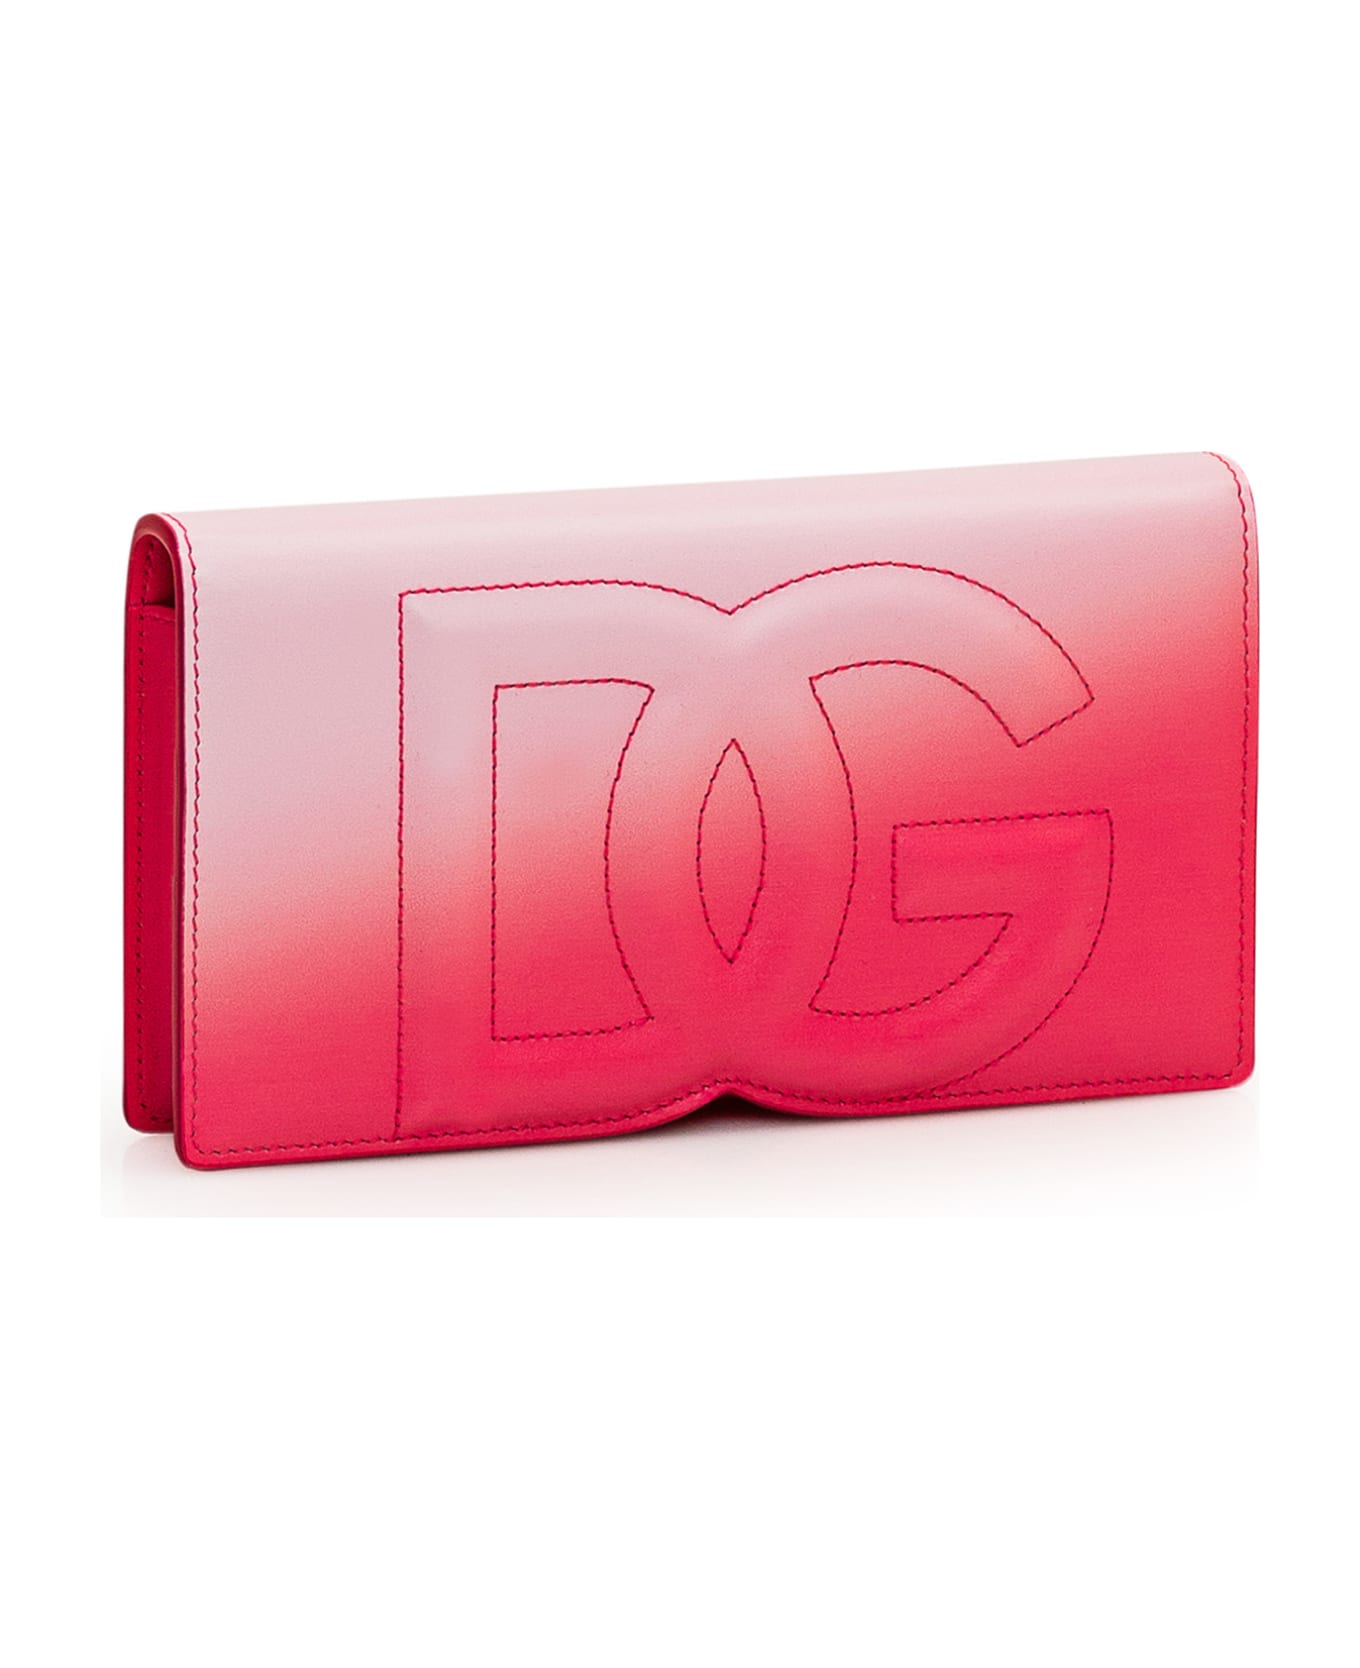 Dolce & Gabbana Phone Bag With Logo - DG DEGRADE ROSA